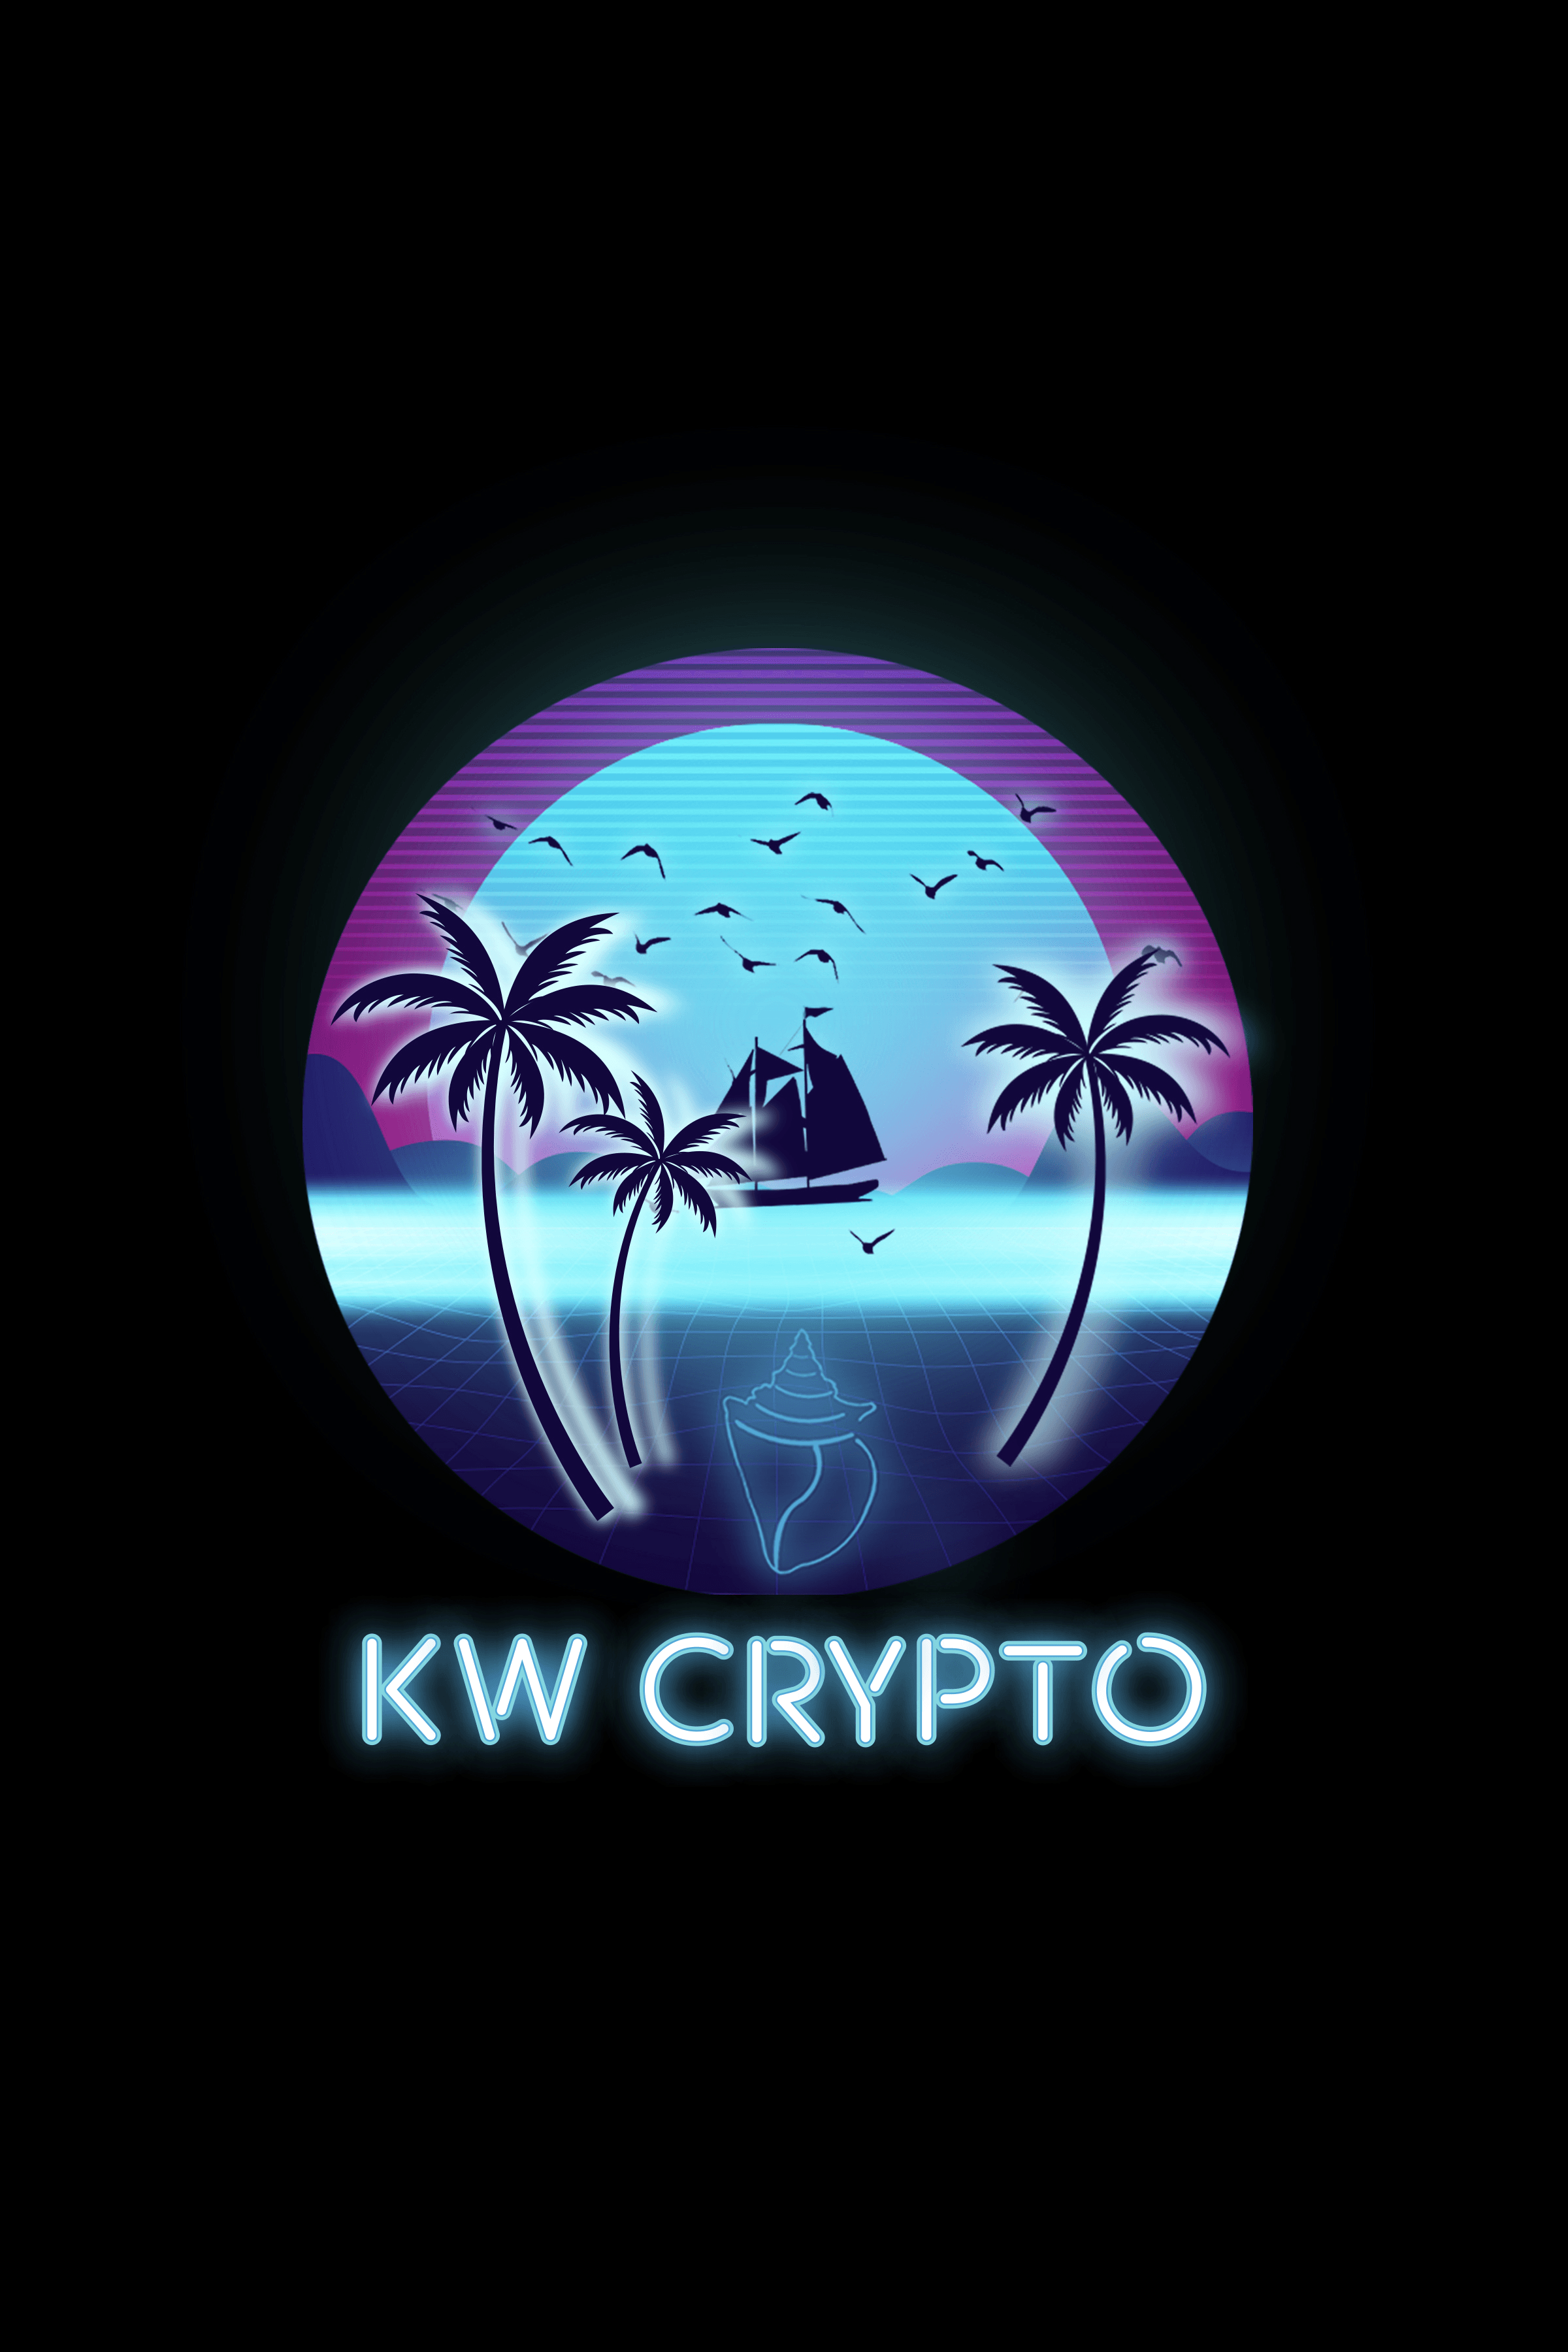 KeyWestCrypto